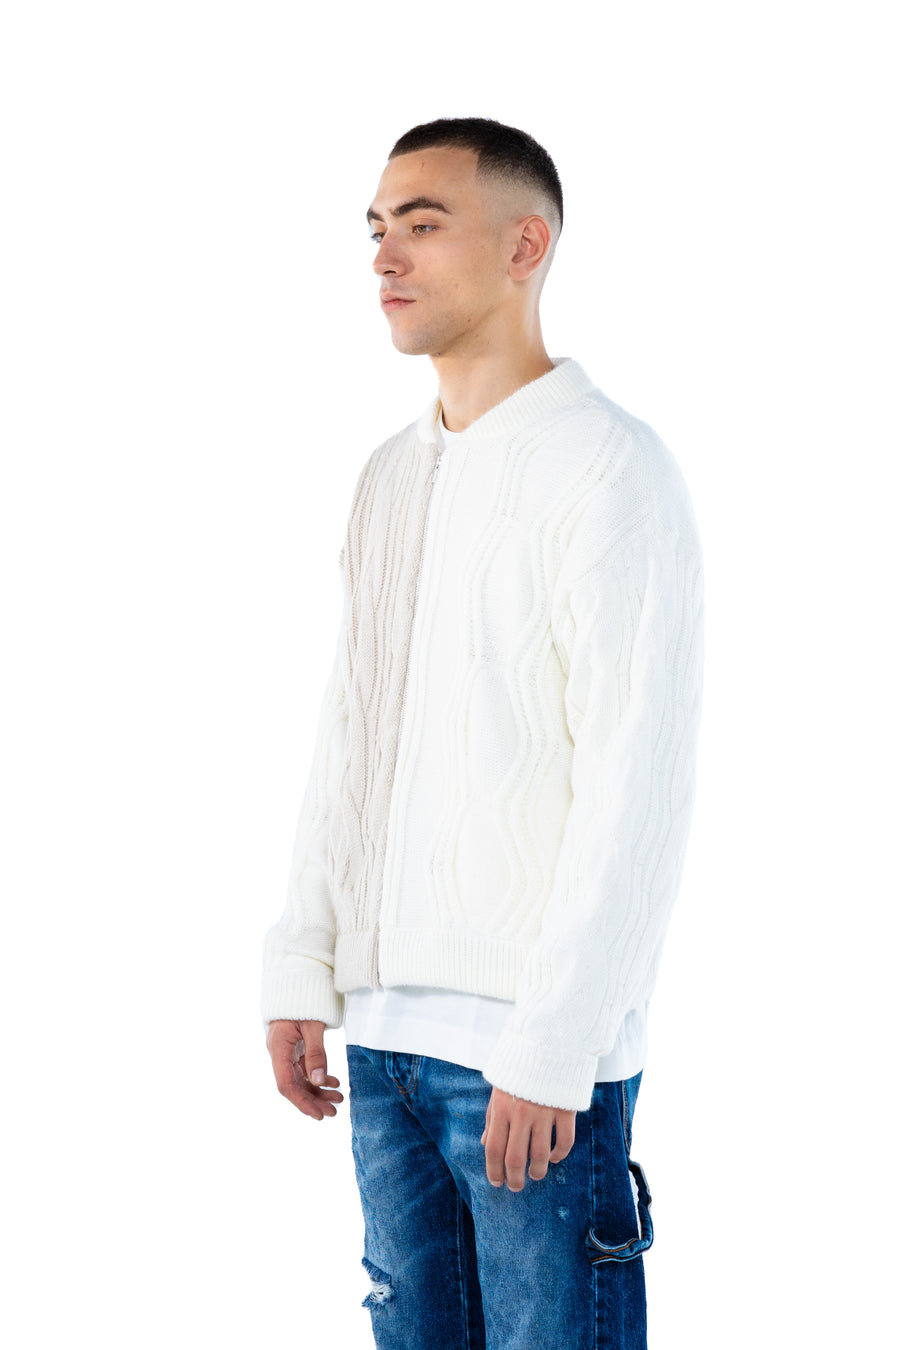 gavensemble maglione jacket50